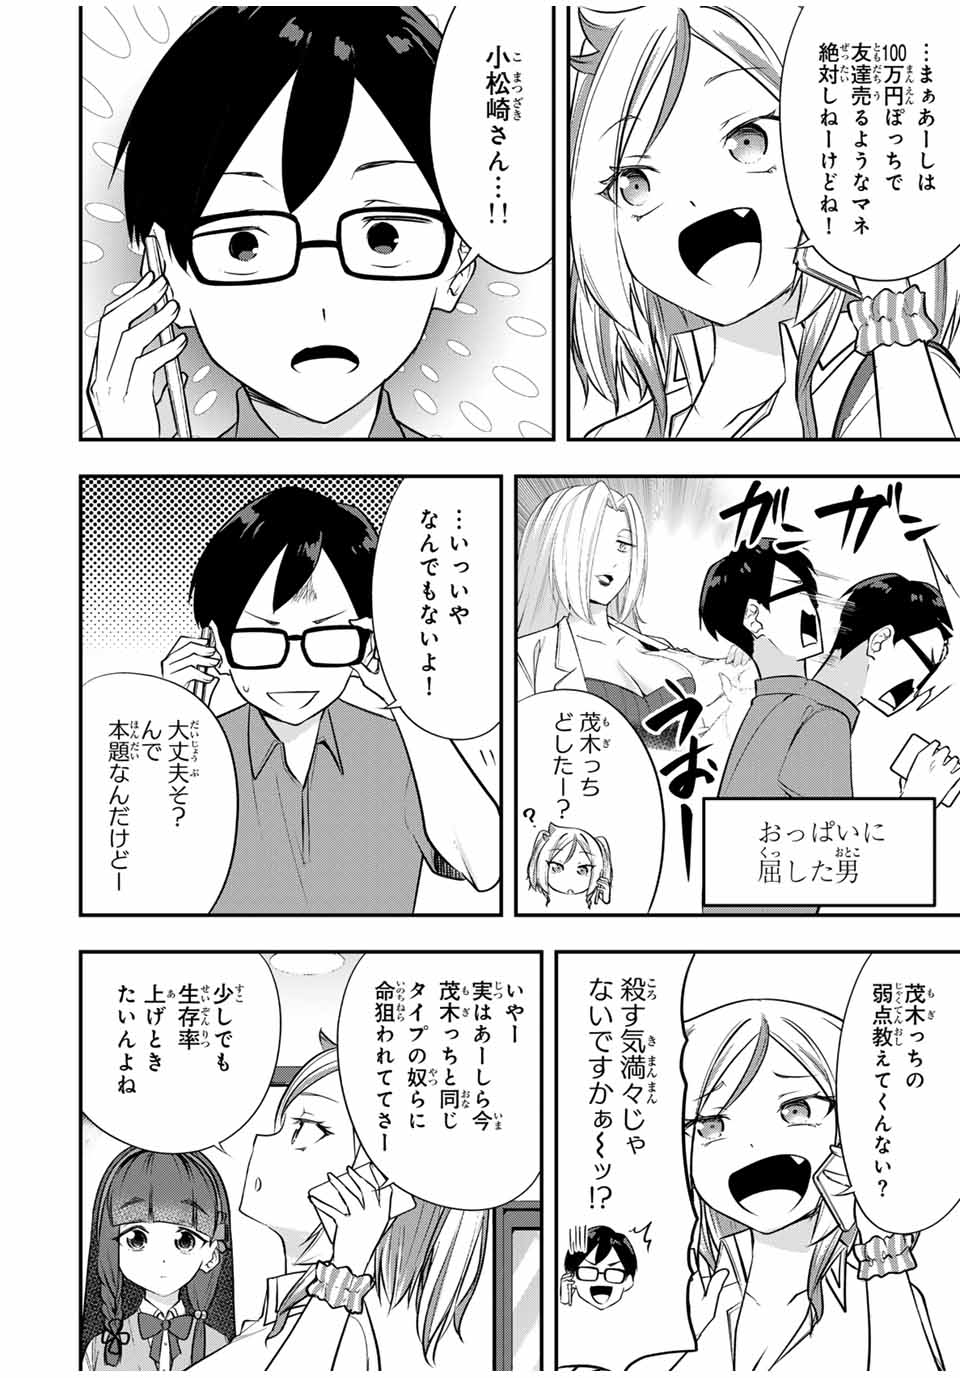 Heroine wa xx Okasegitai - Chapter 13 - Page 14